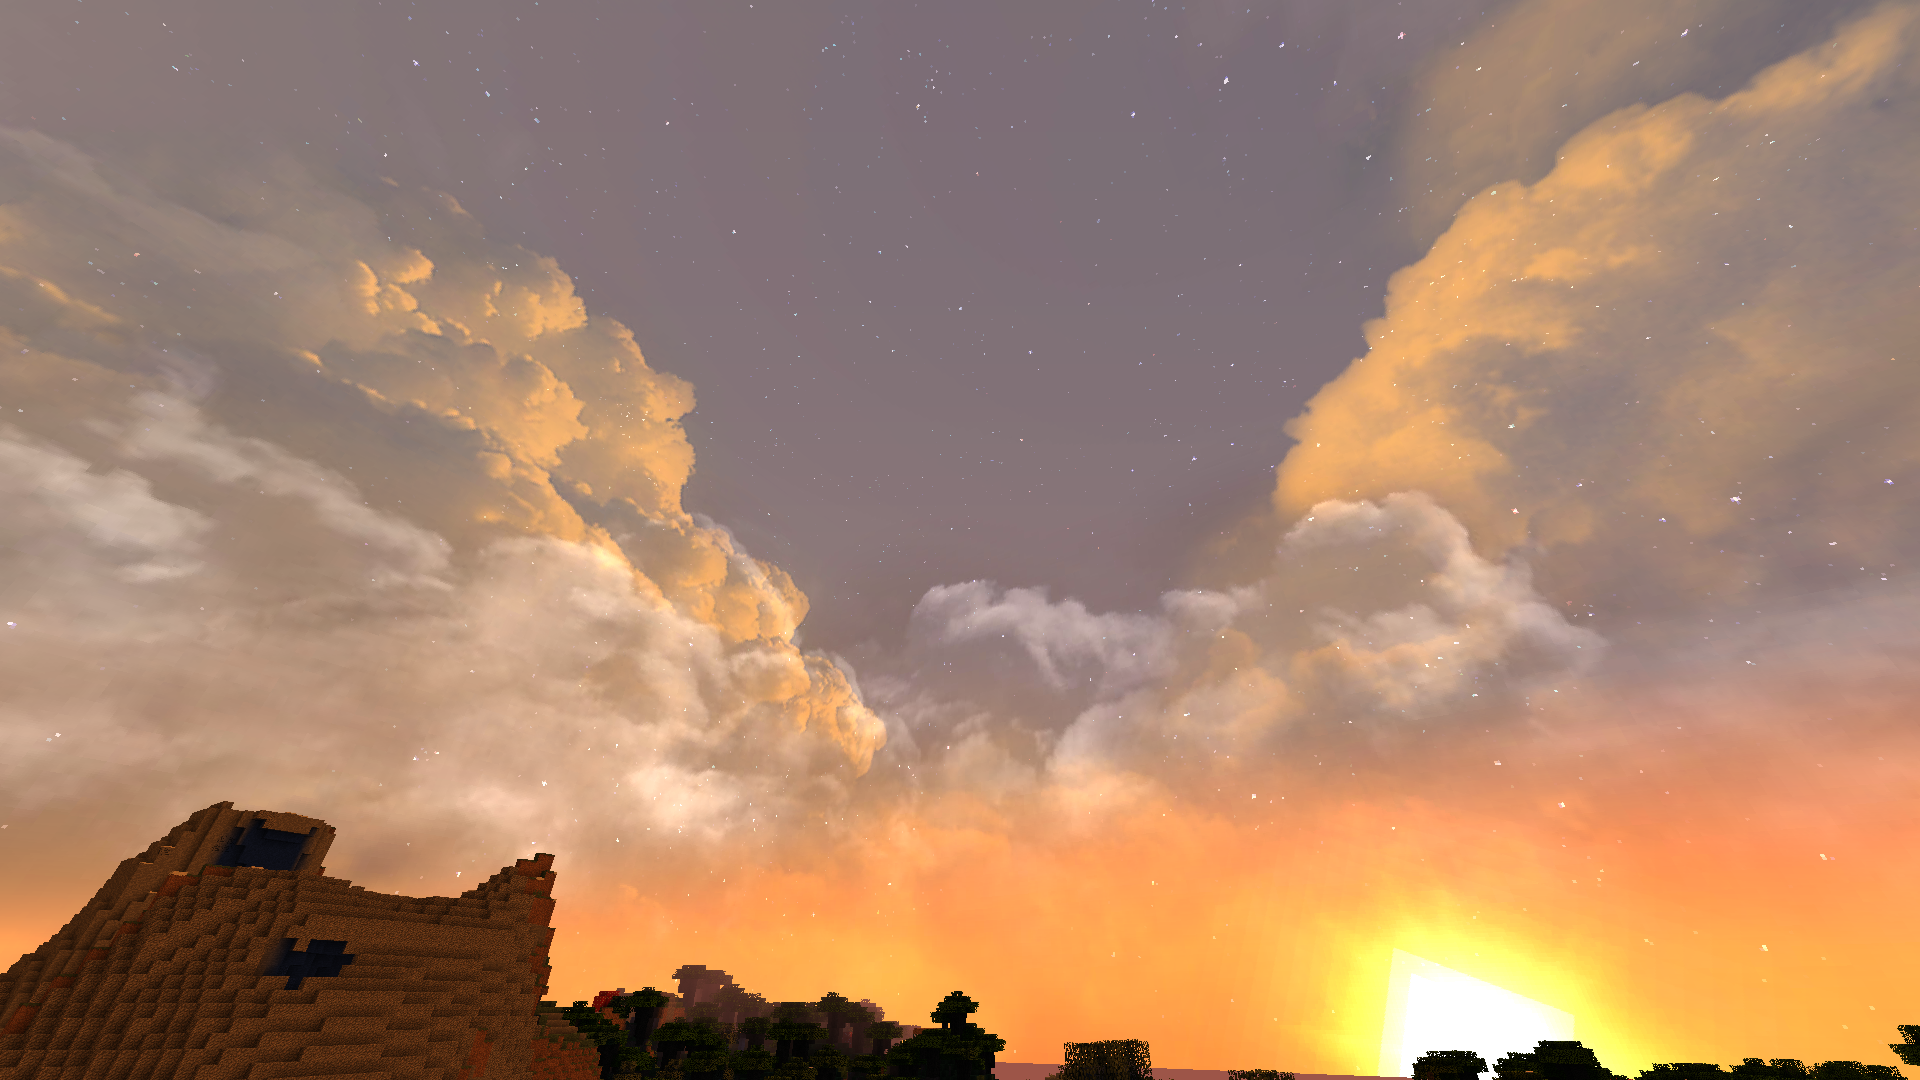 Dramatic Skys screenshot 1